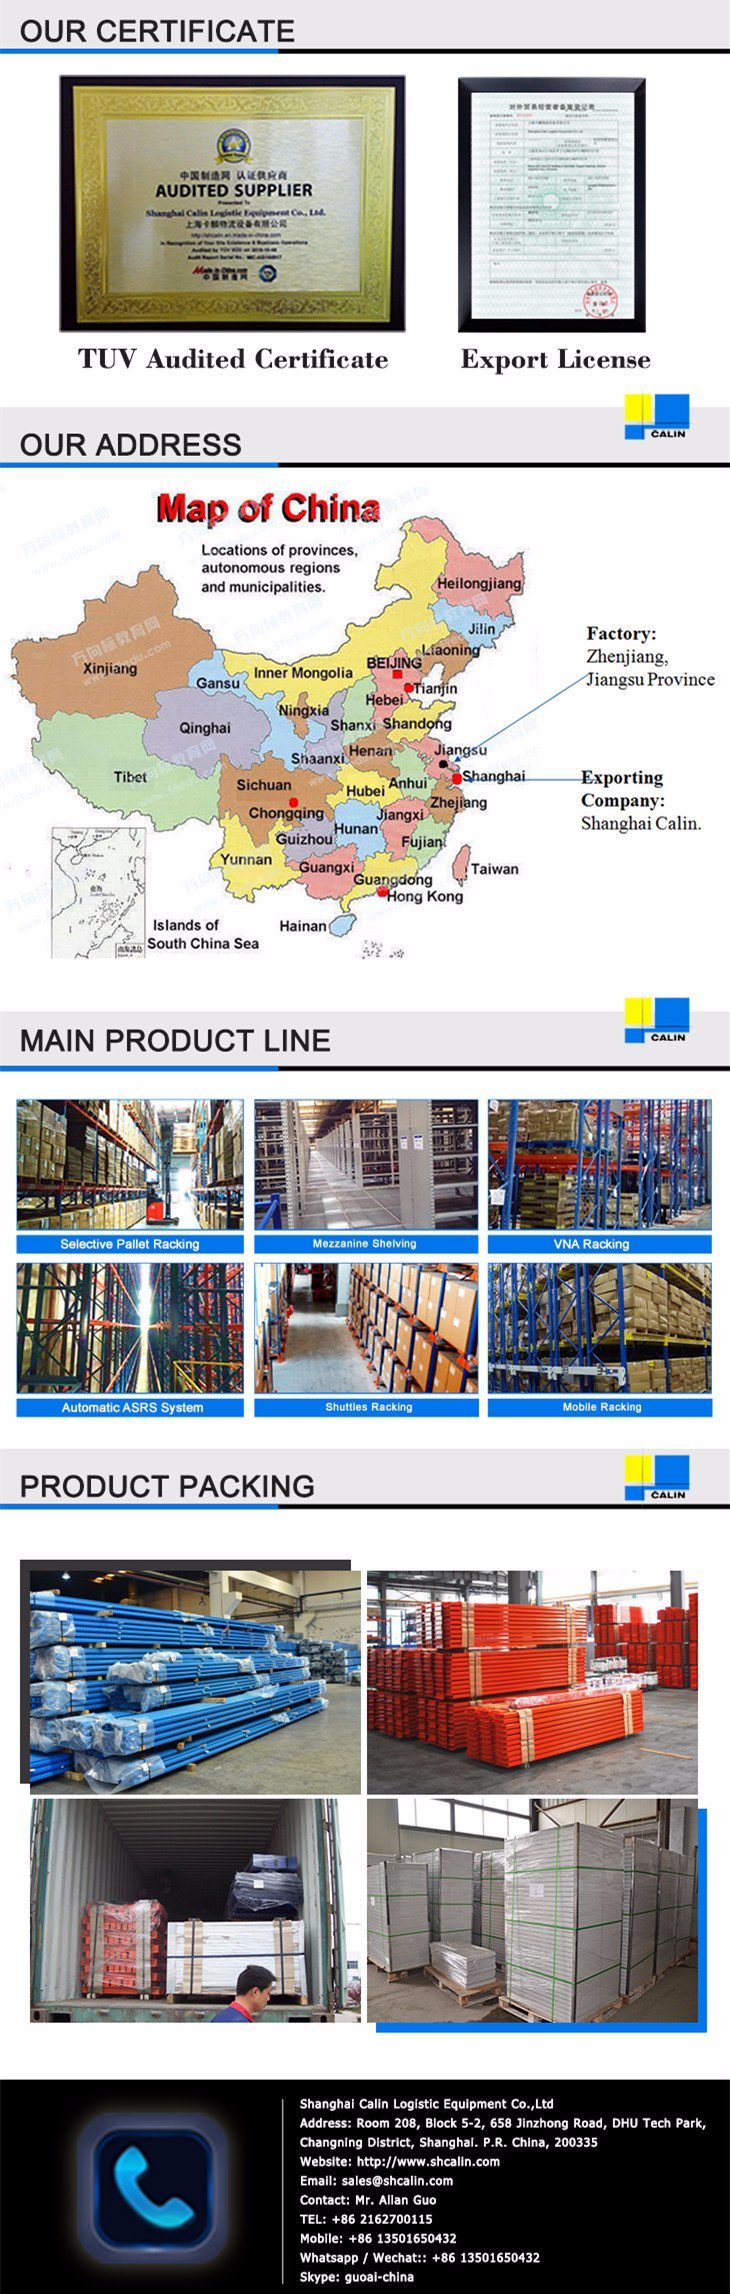 Warehouse Storage Adjustable Heavy Duty Steel Pallet Rack